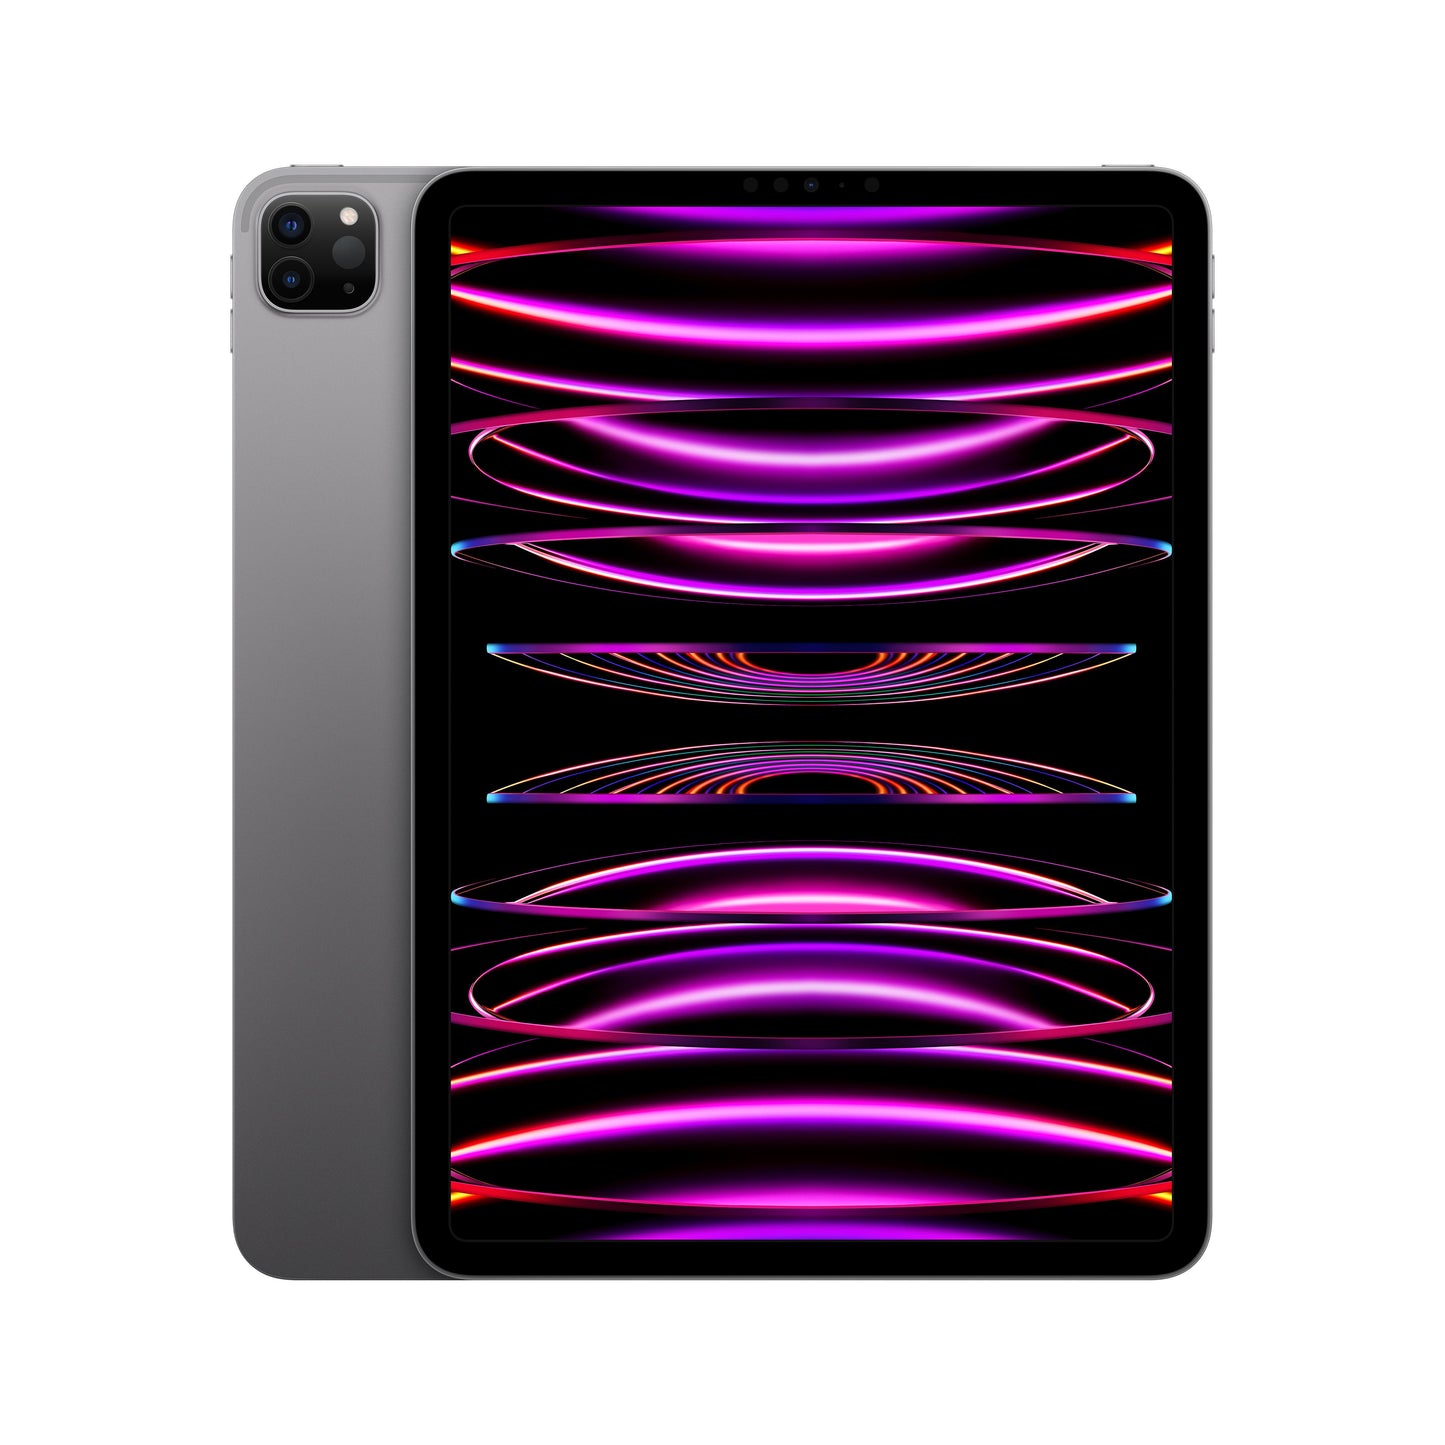 2022 11-inch iPad Pro Wi-Fi 128GB - Space Grey (4th generation)